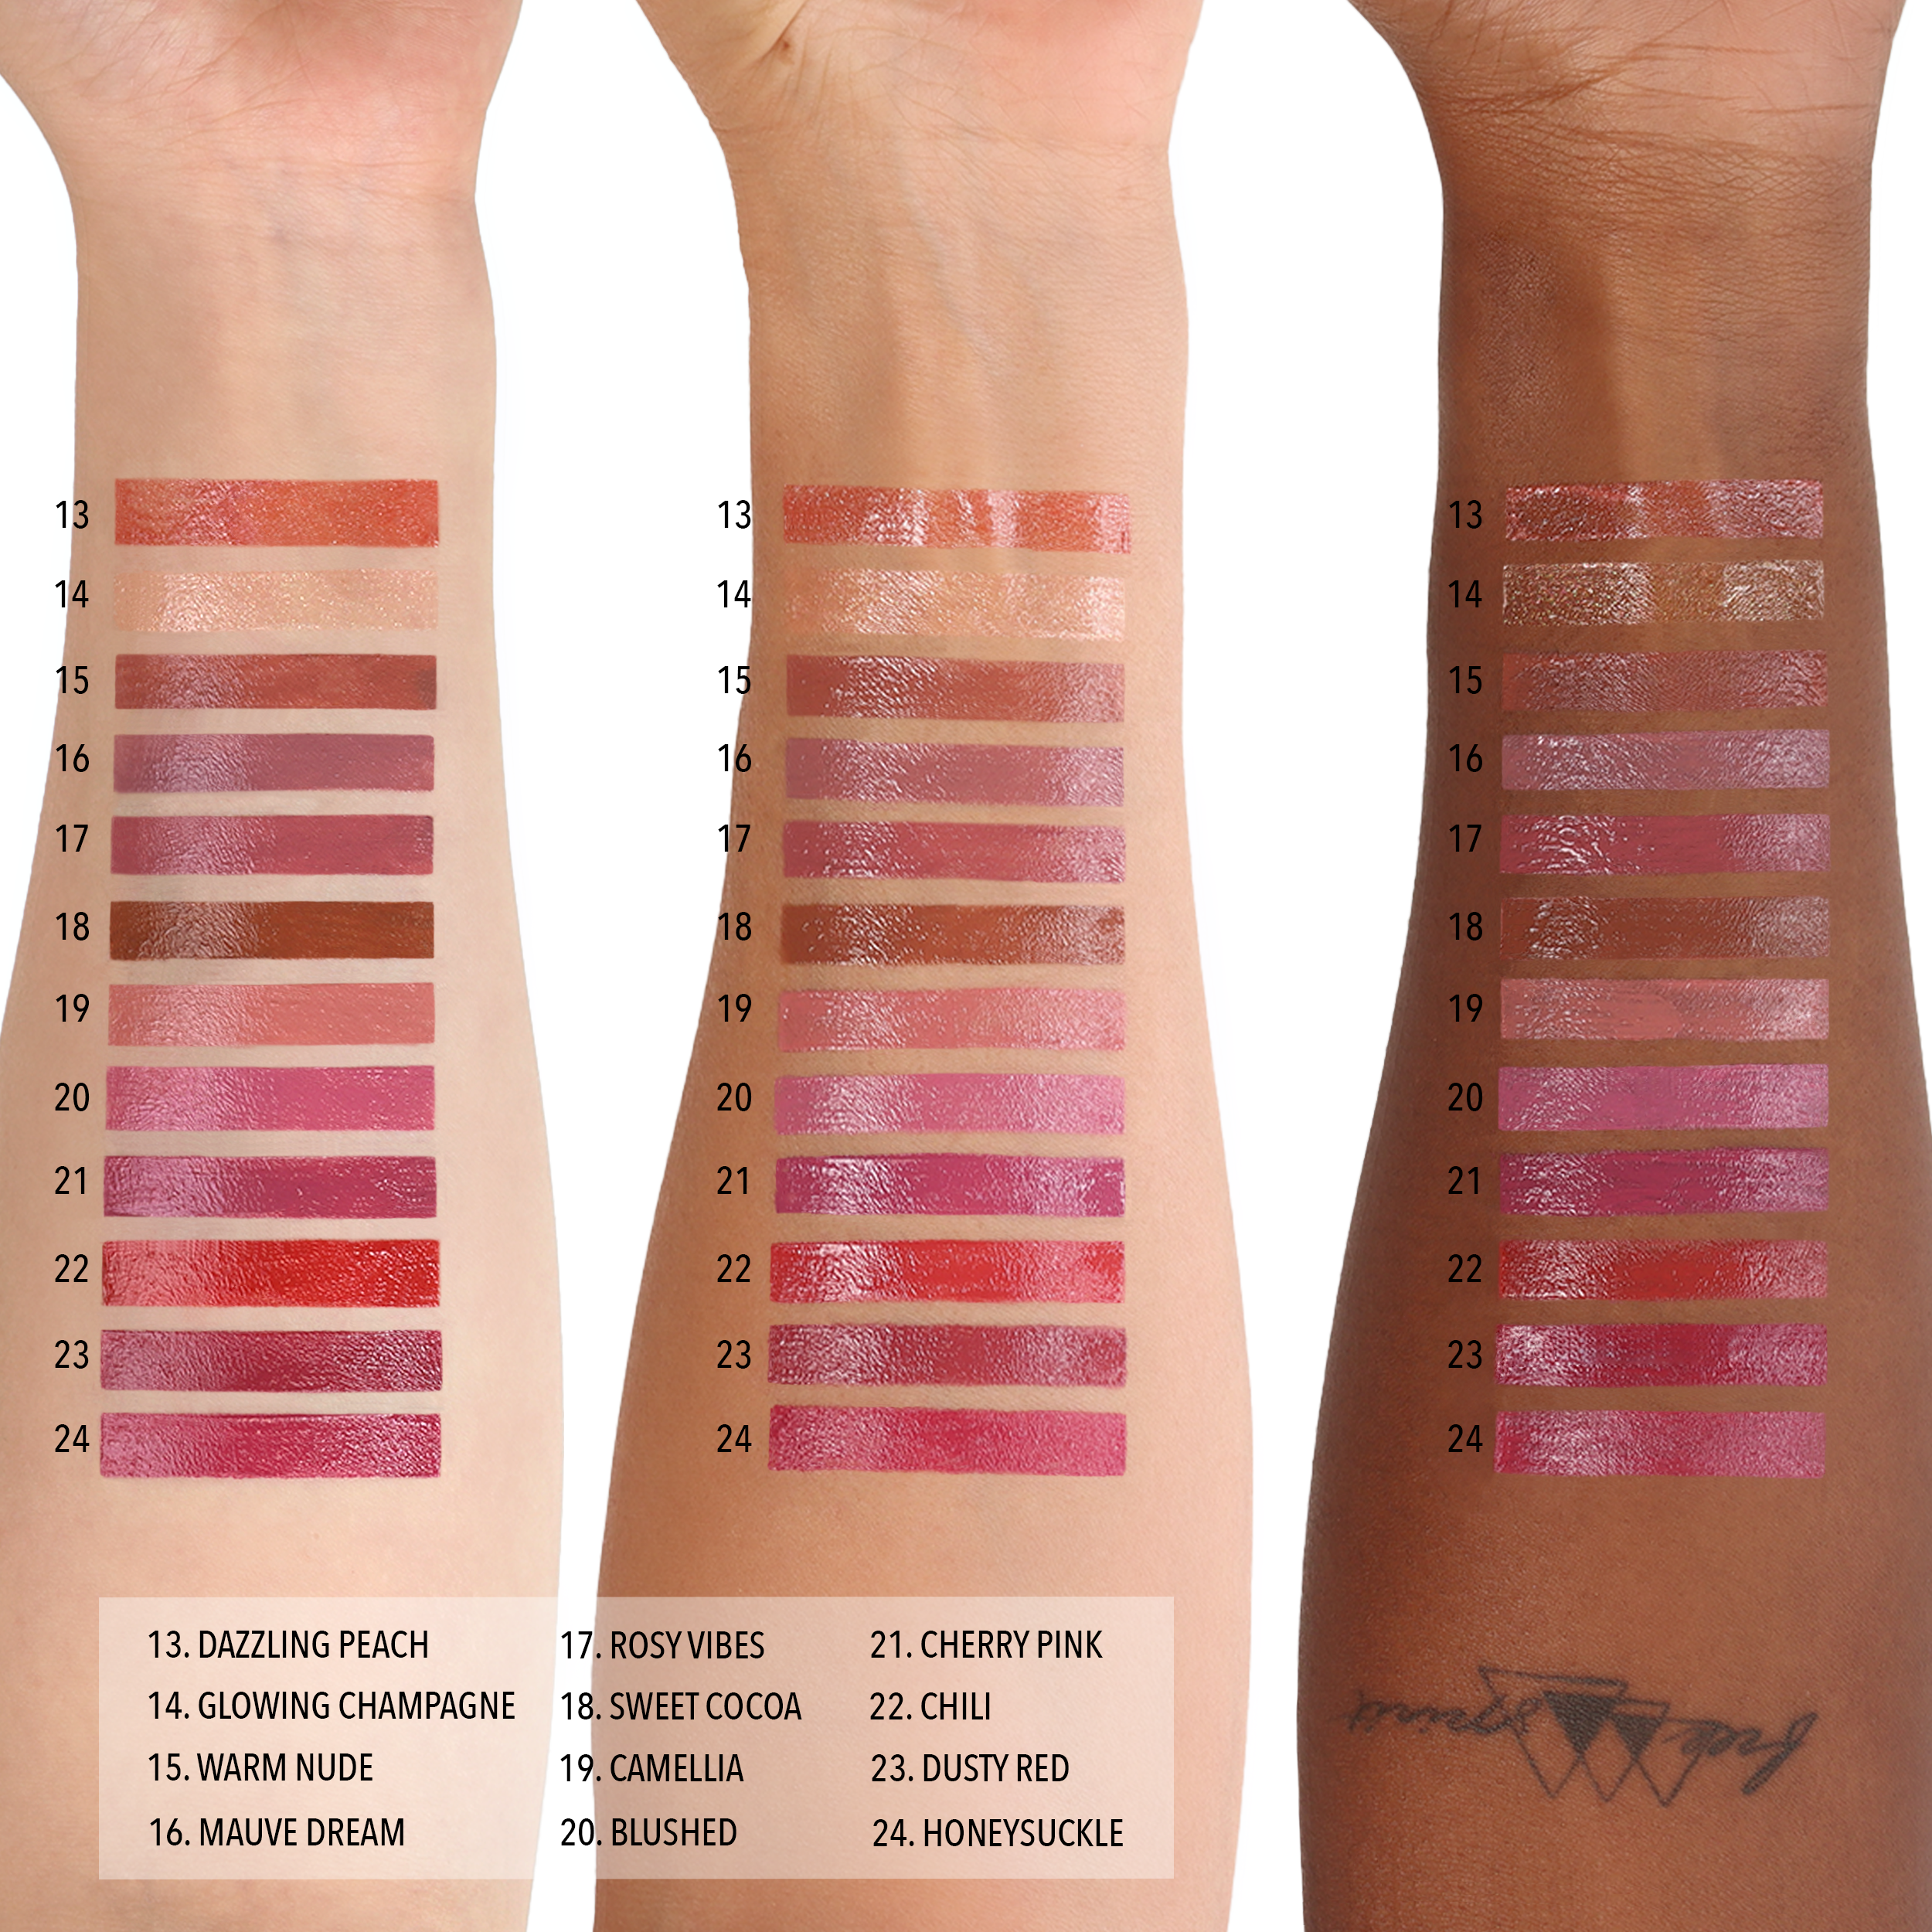 Signature Lipstick (021, Cheery Pink)